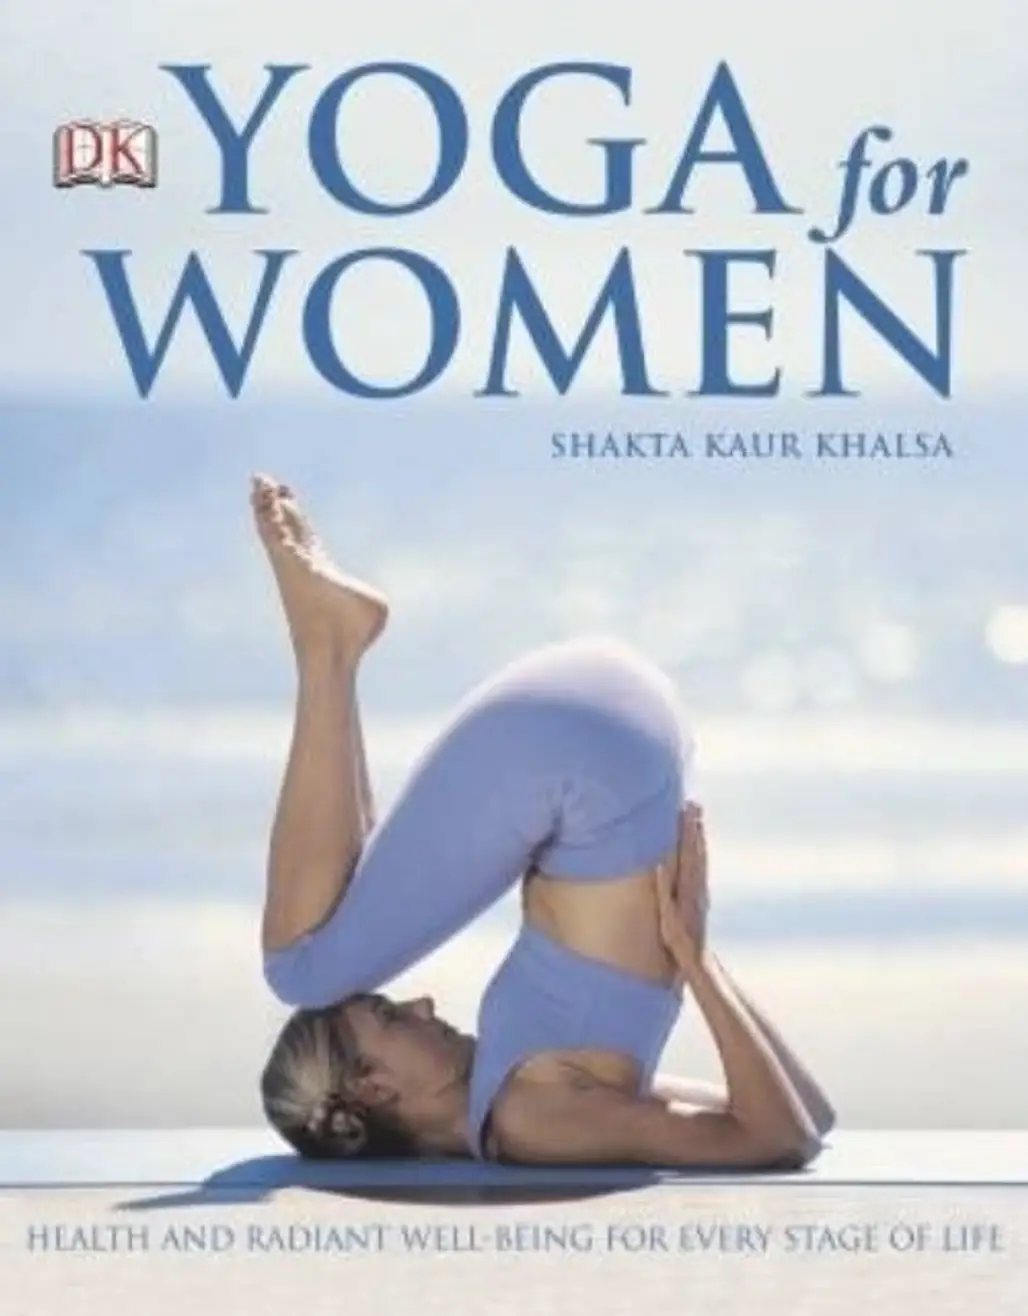 Yoga for Women – by Shakta Kaur Kahlsa